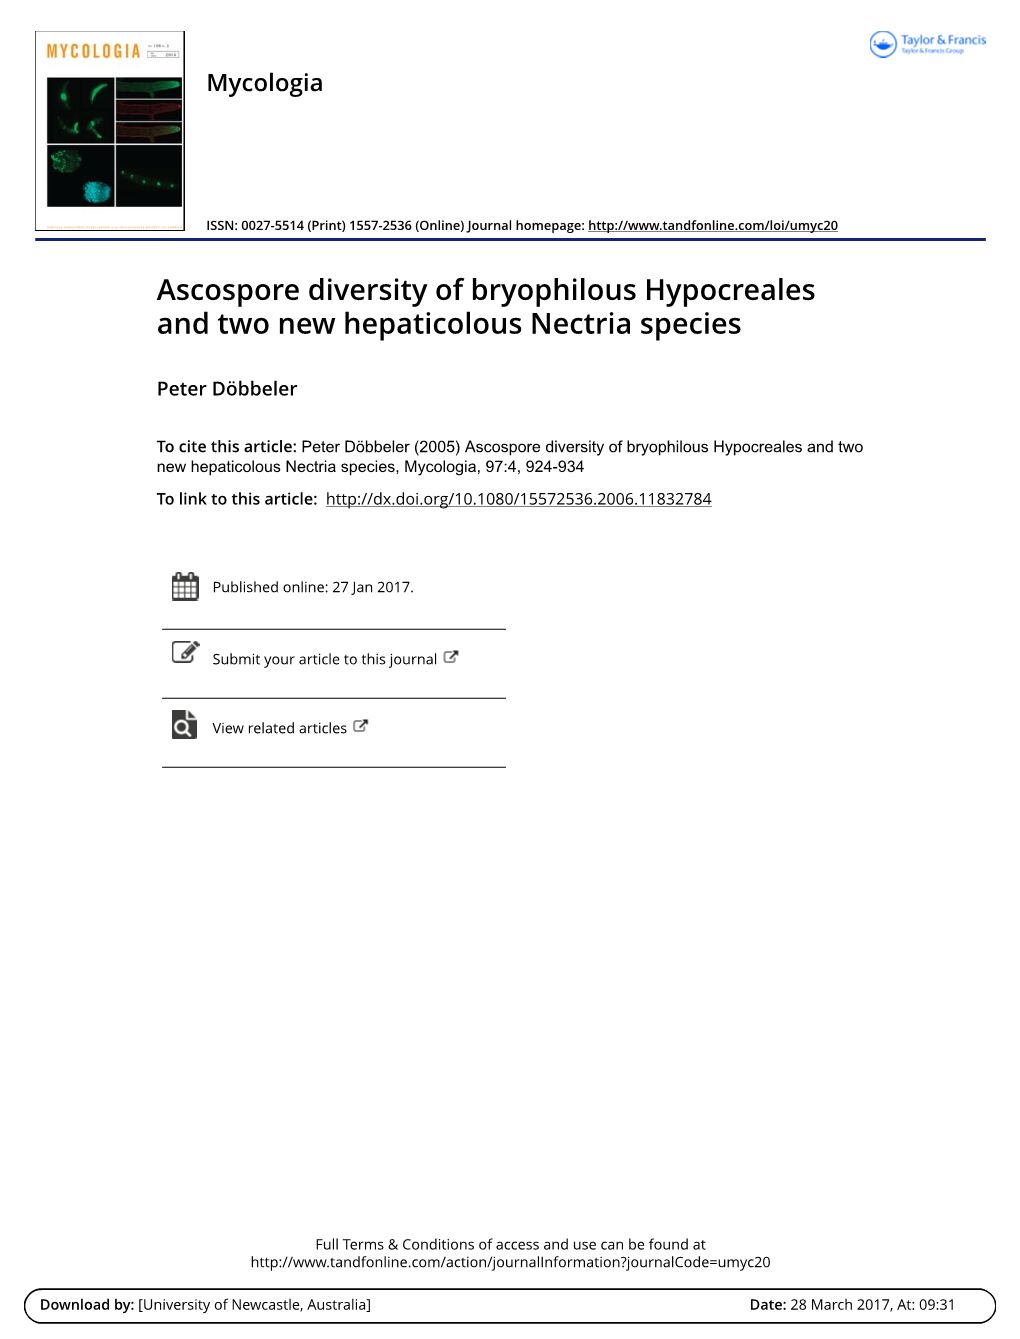 Ascospore Diversity of Bryophilous Hypocreales and Two New Hepaticolous Nectria Species